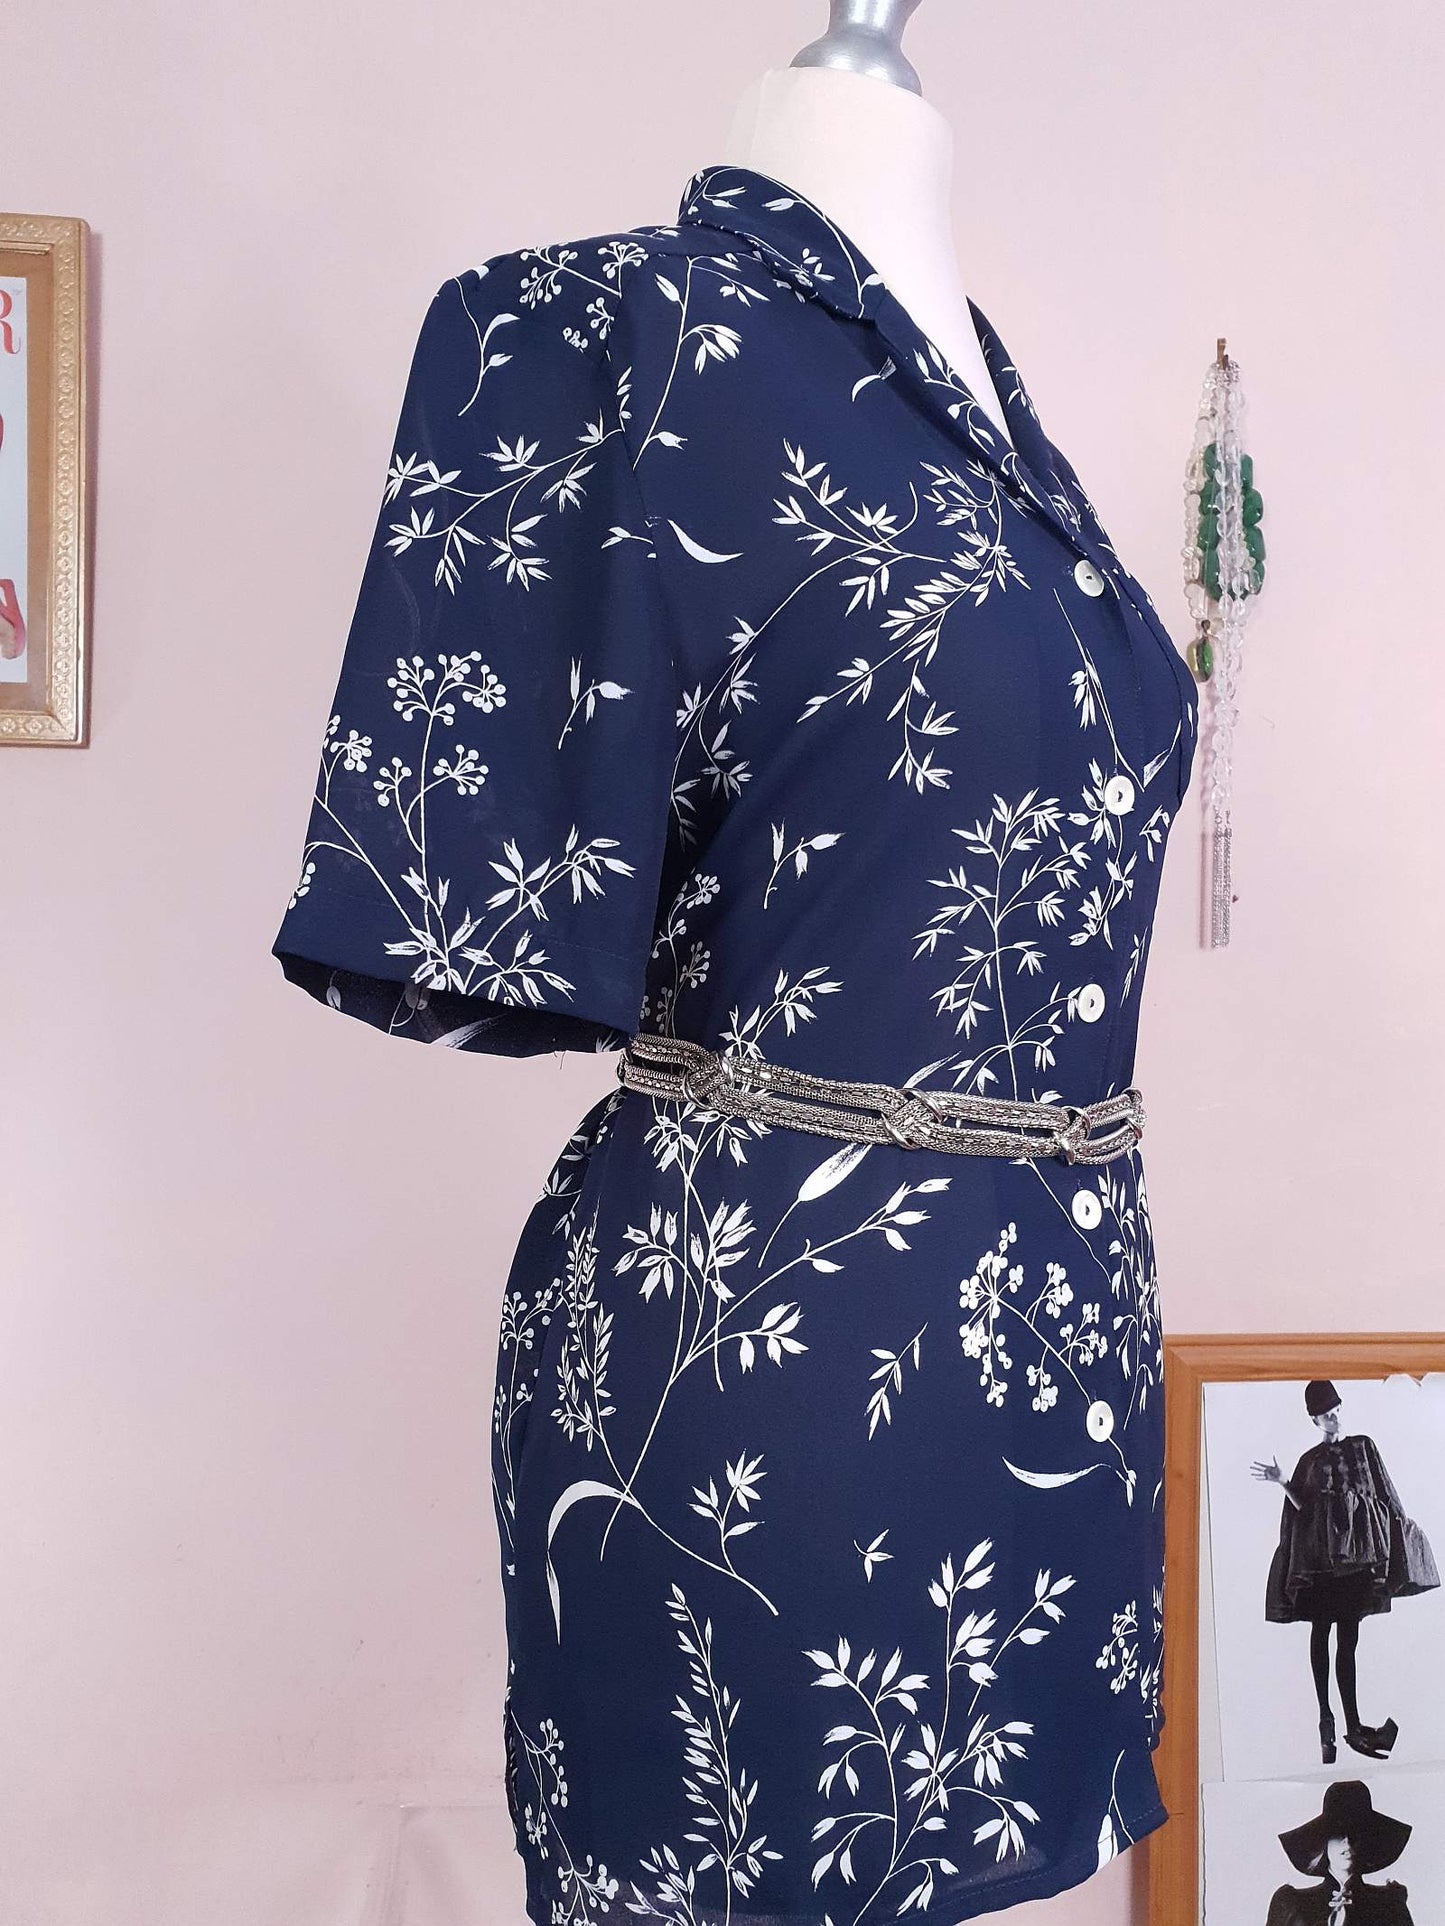 Vintage 1980s Navy Blue Floral Top Size 12 / 14 Chiffon Blouse